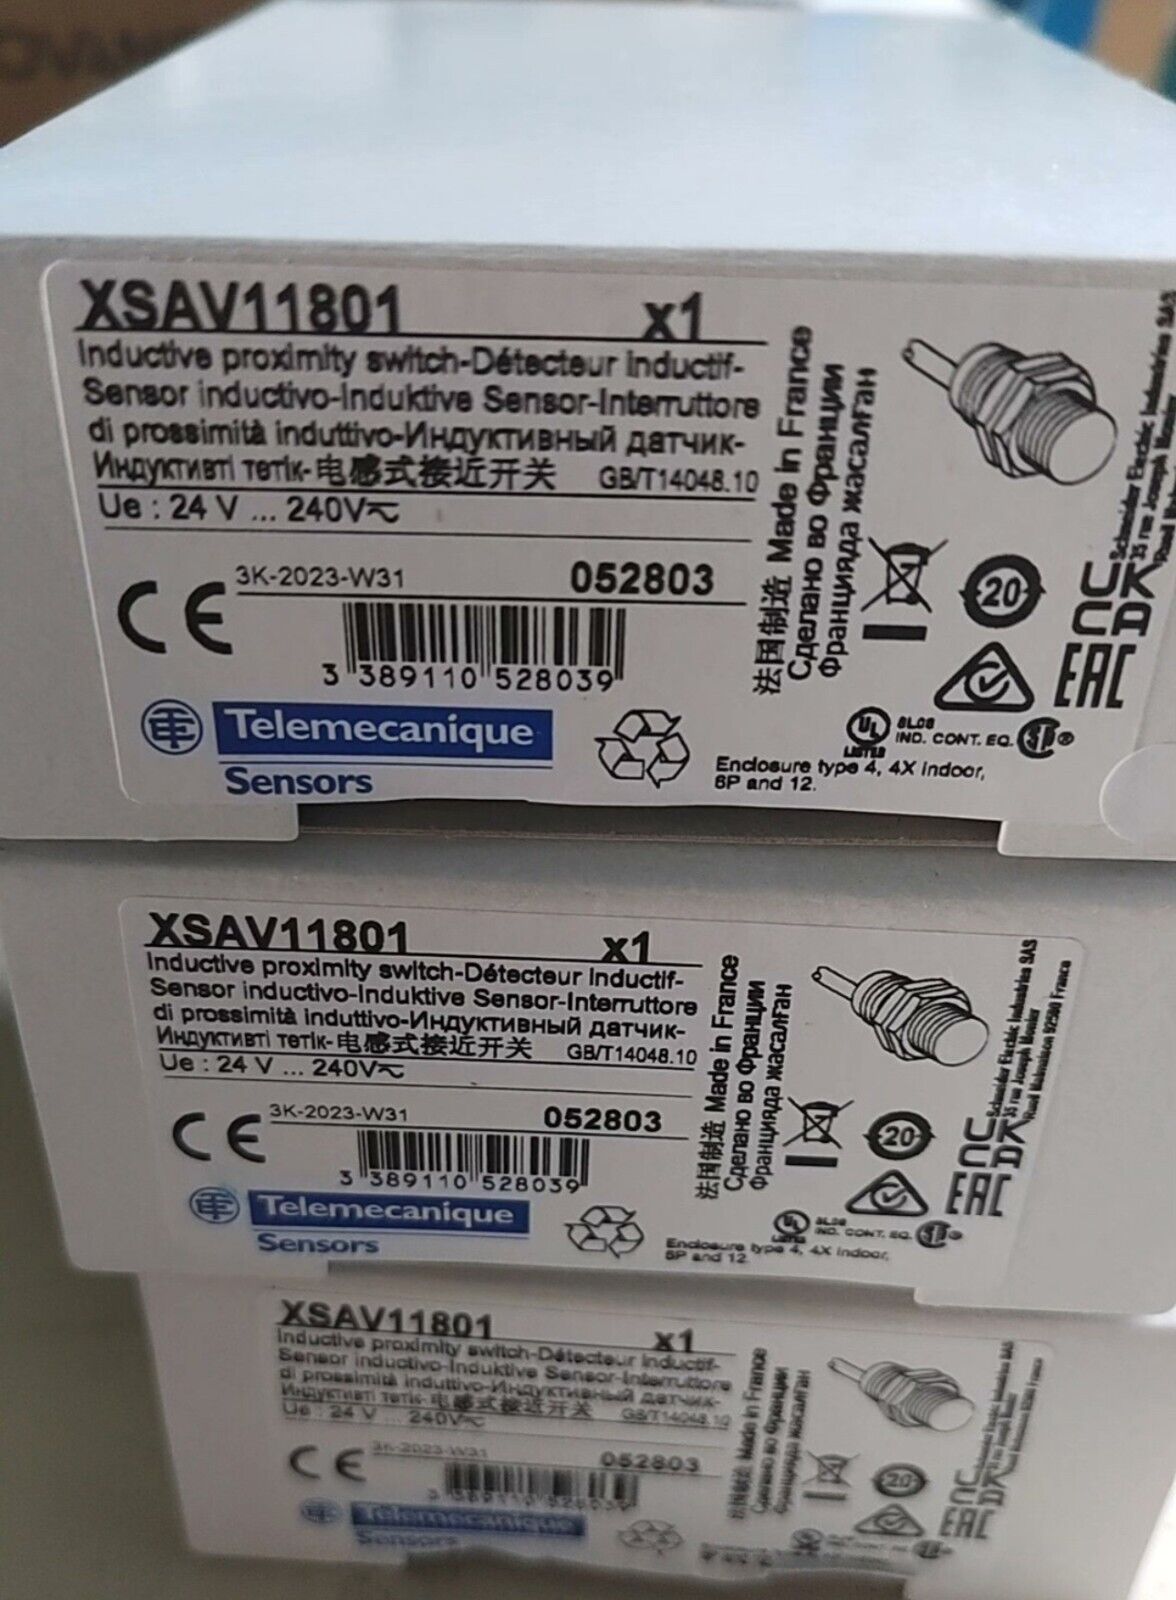 1PCS Schneider XSAV11801 Proximity Switch New in box